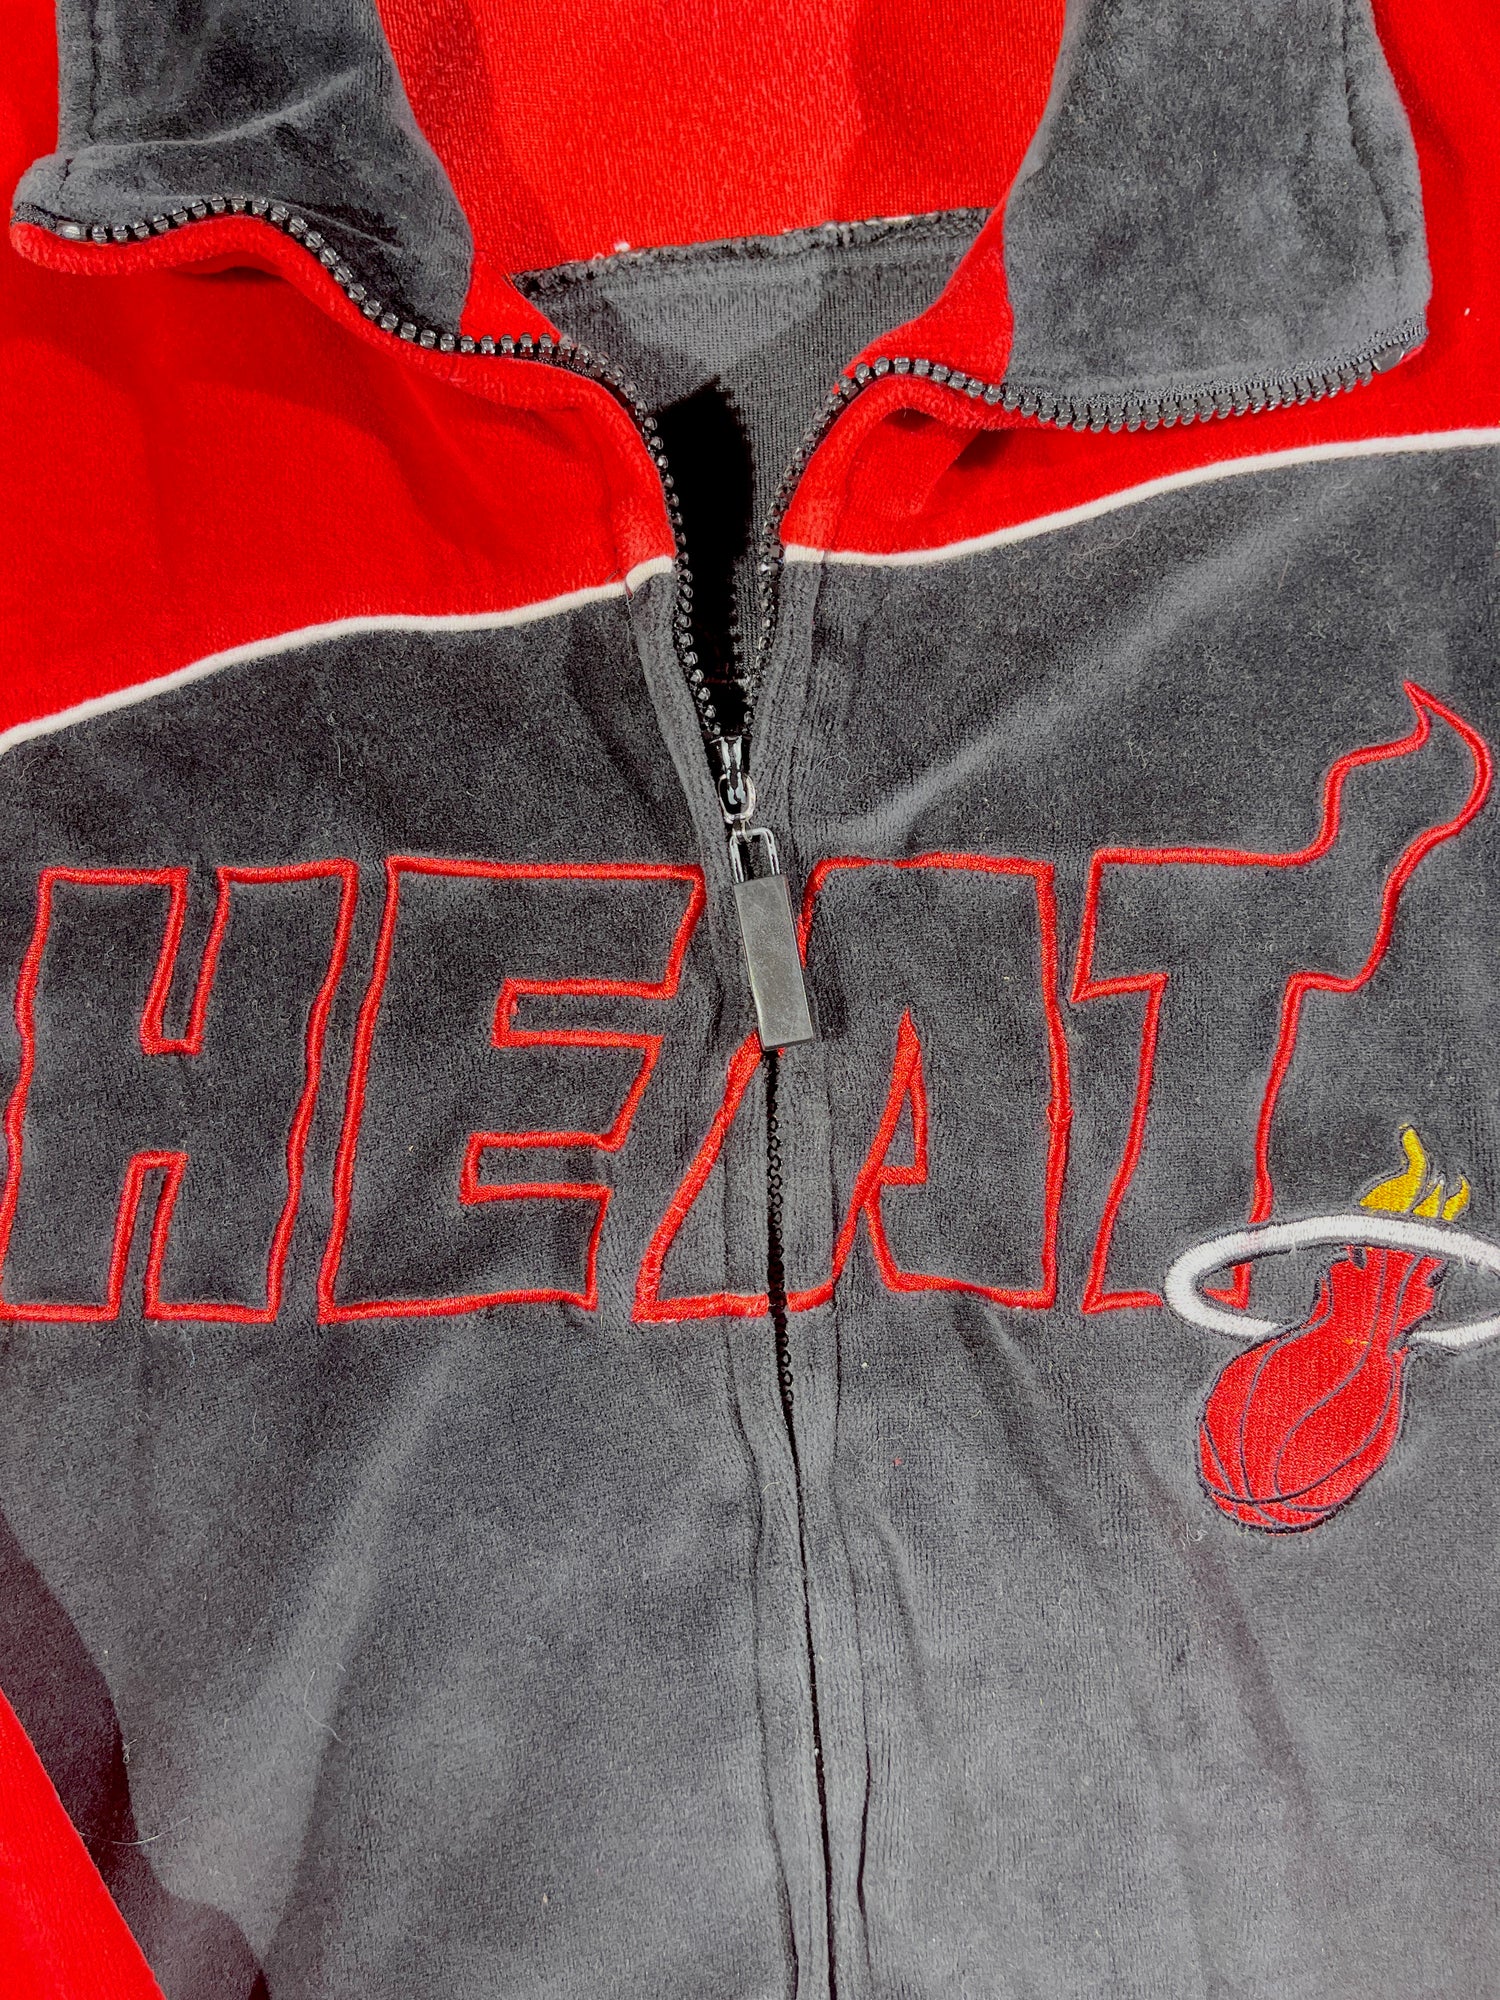 NBA, Shirts, Nba Miami Heat Hoodie Sweatshirt Red Sz S